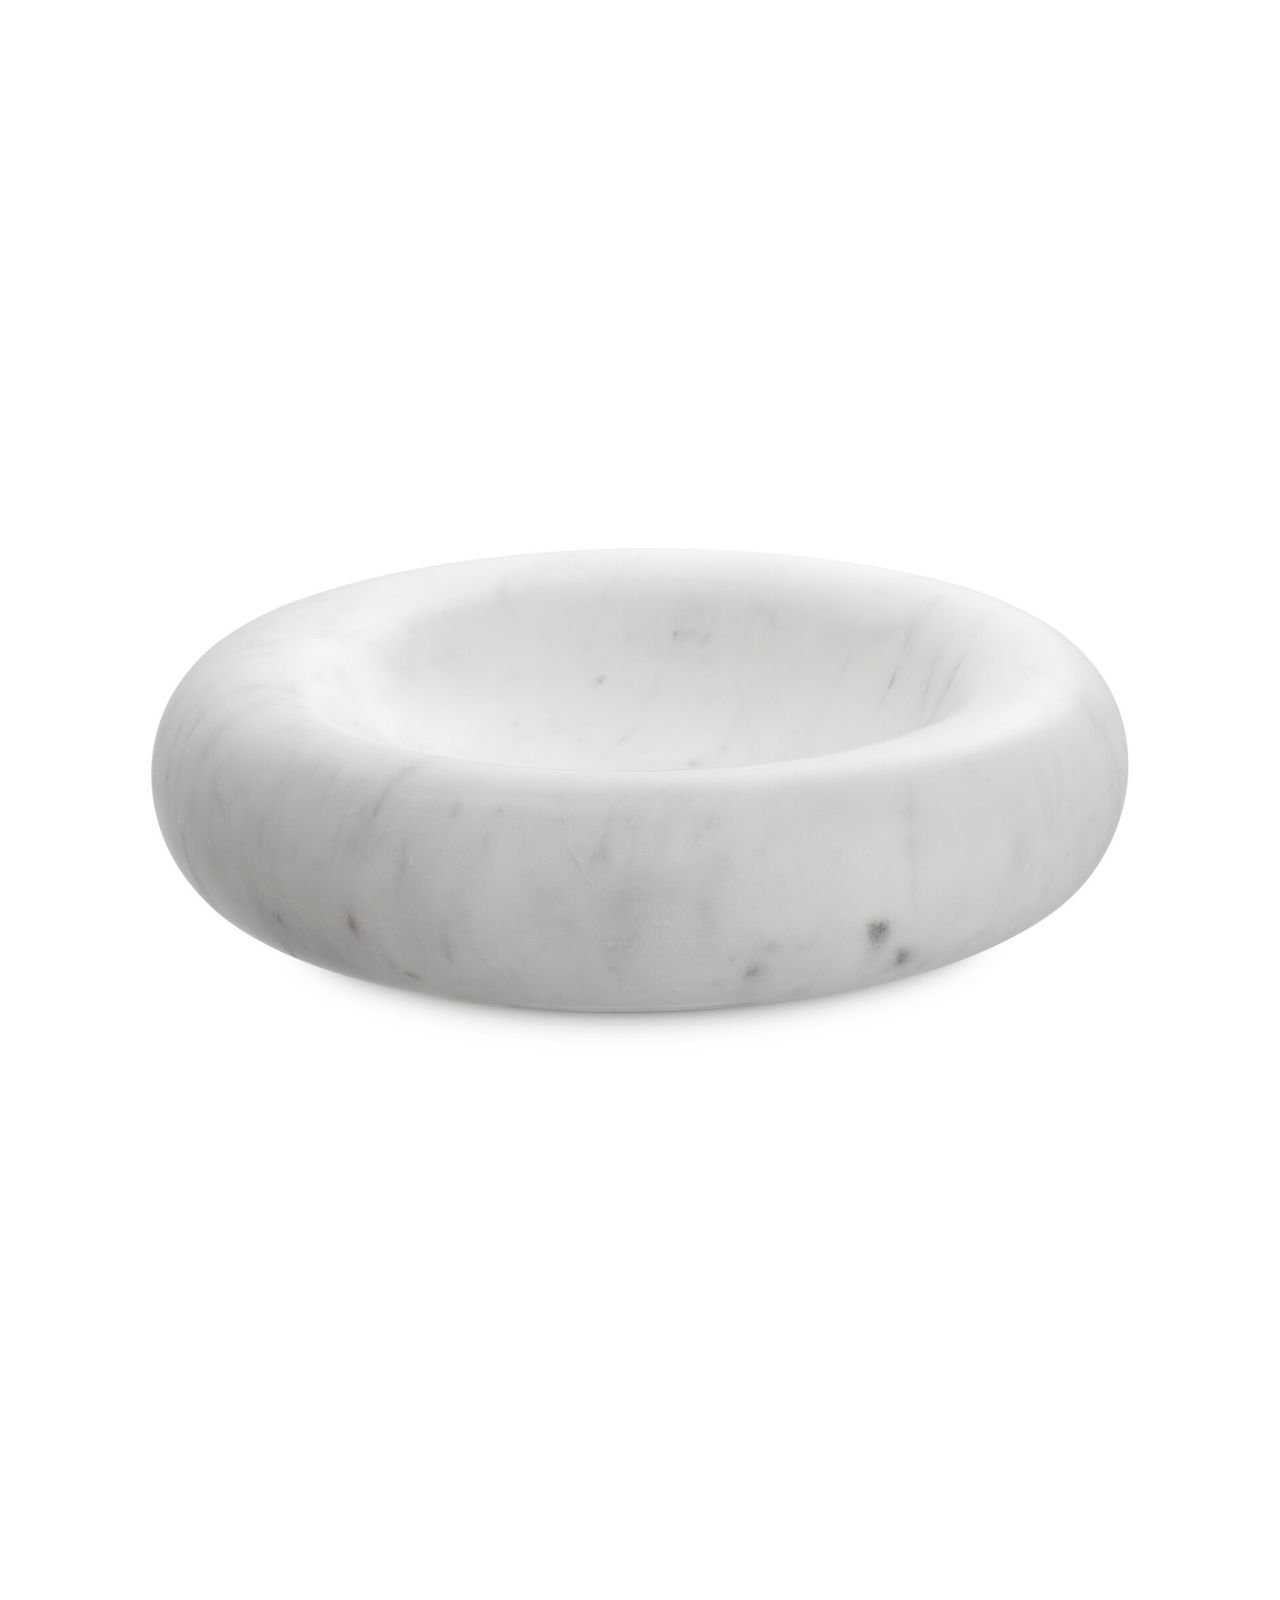 Lizz bowl white marble